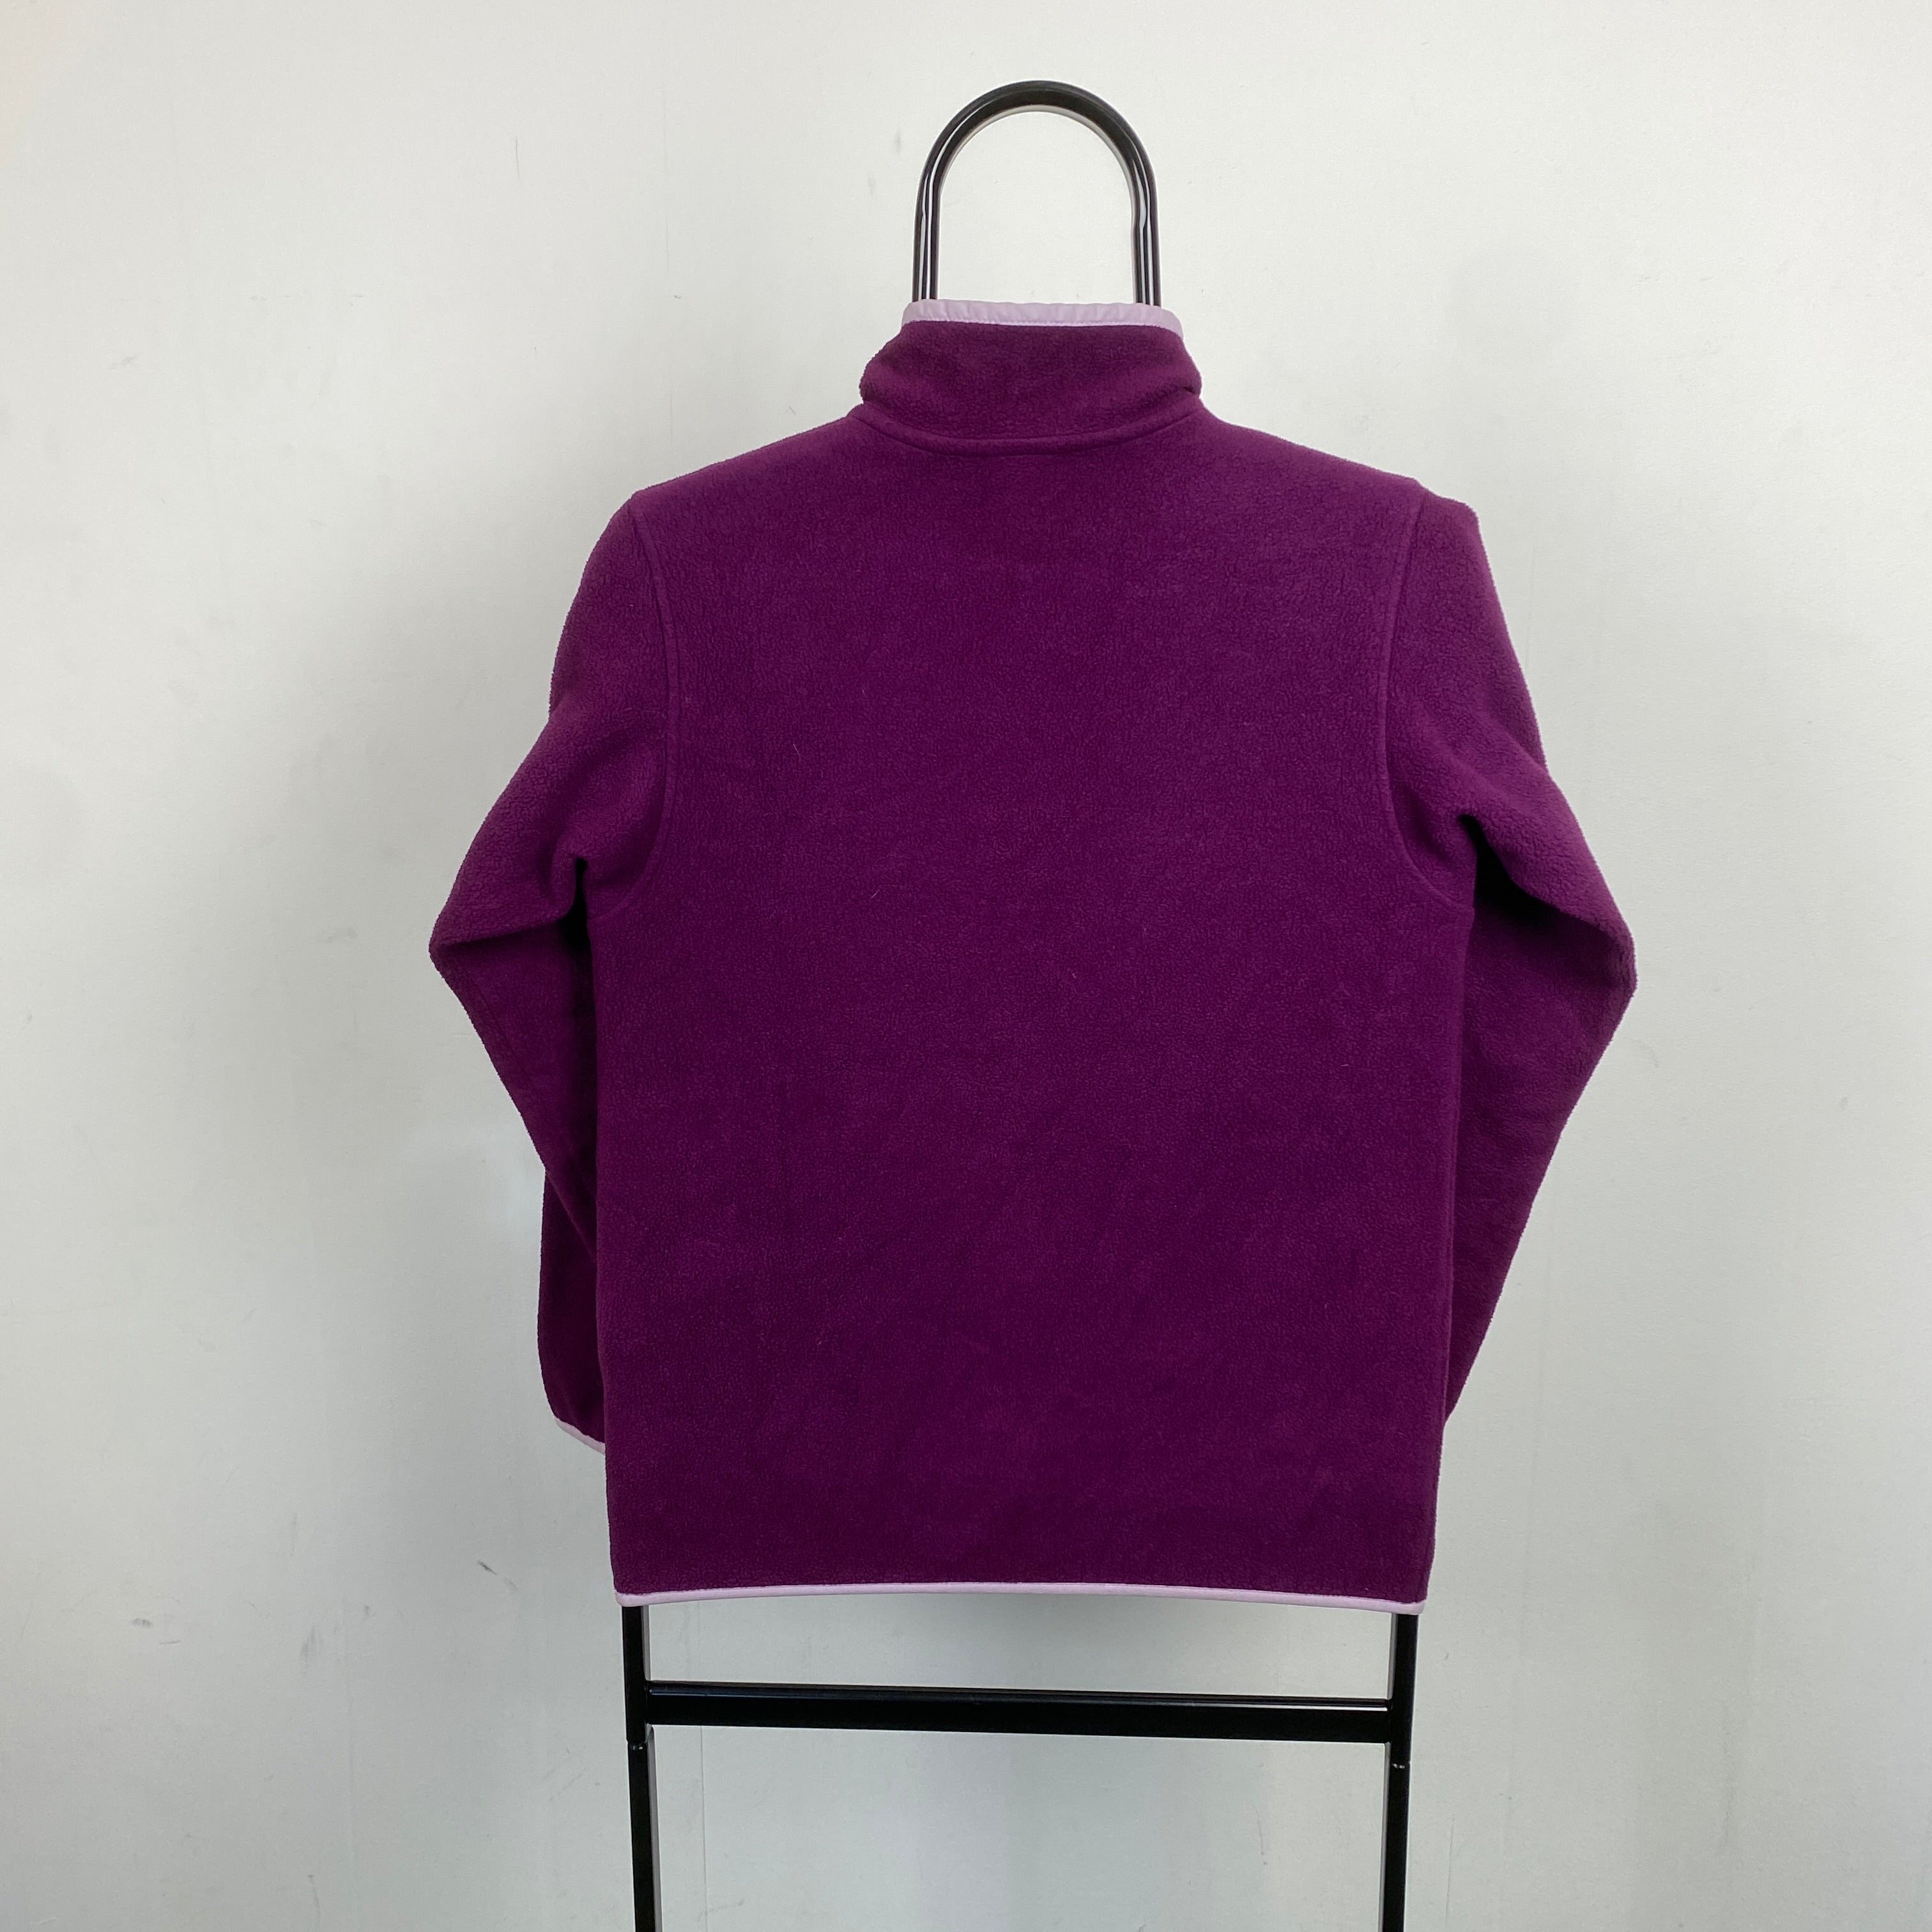 Retro Patagonia Synchilla Fleece Sweatshirt Purple XS